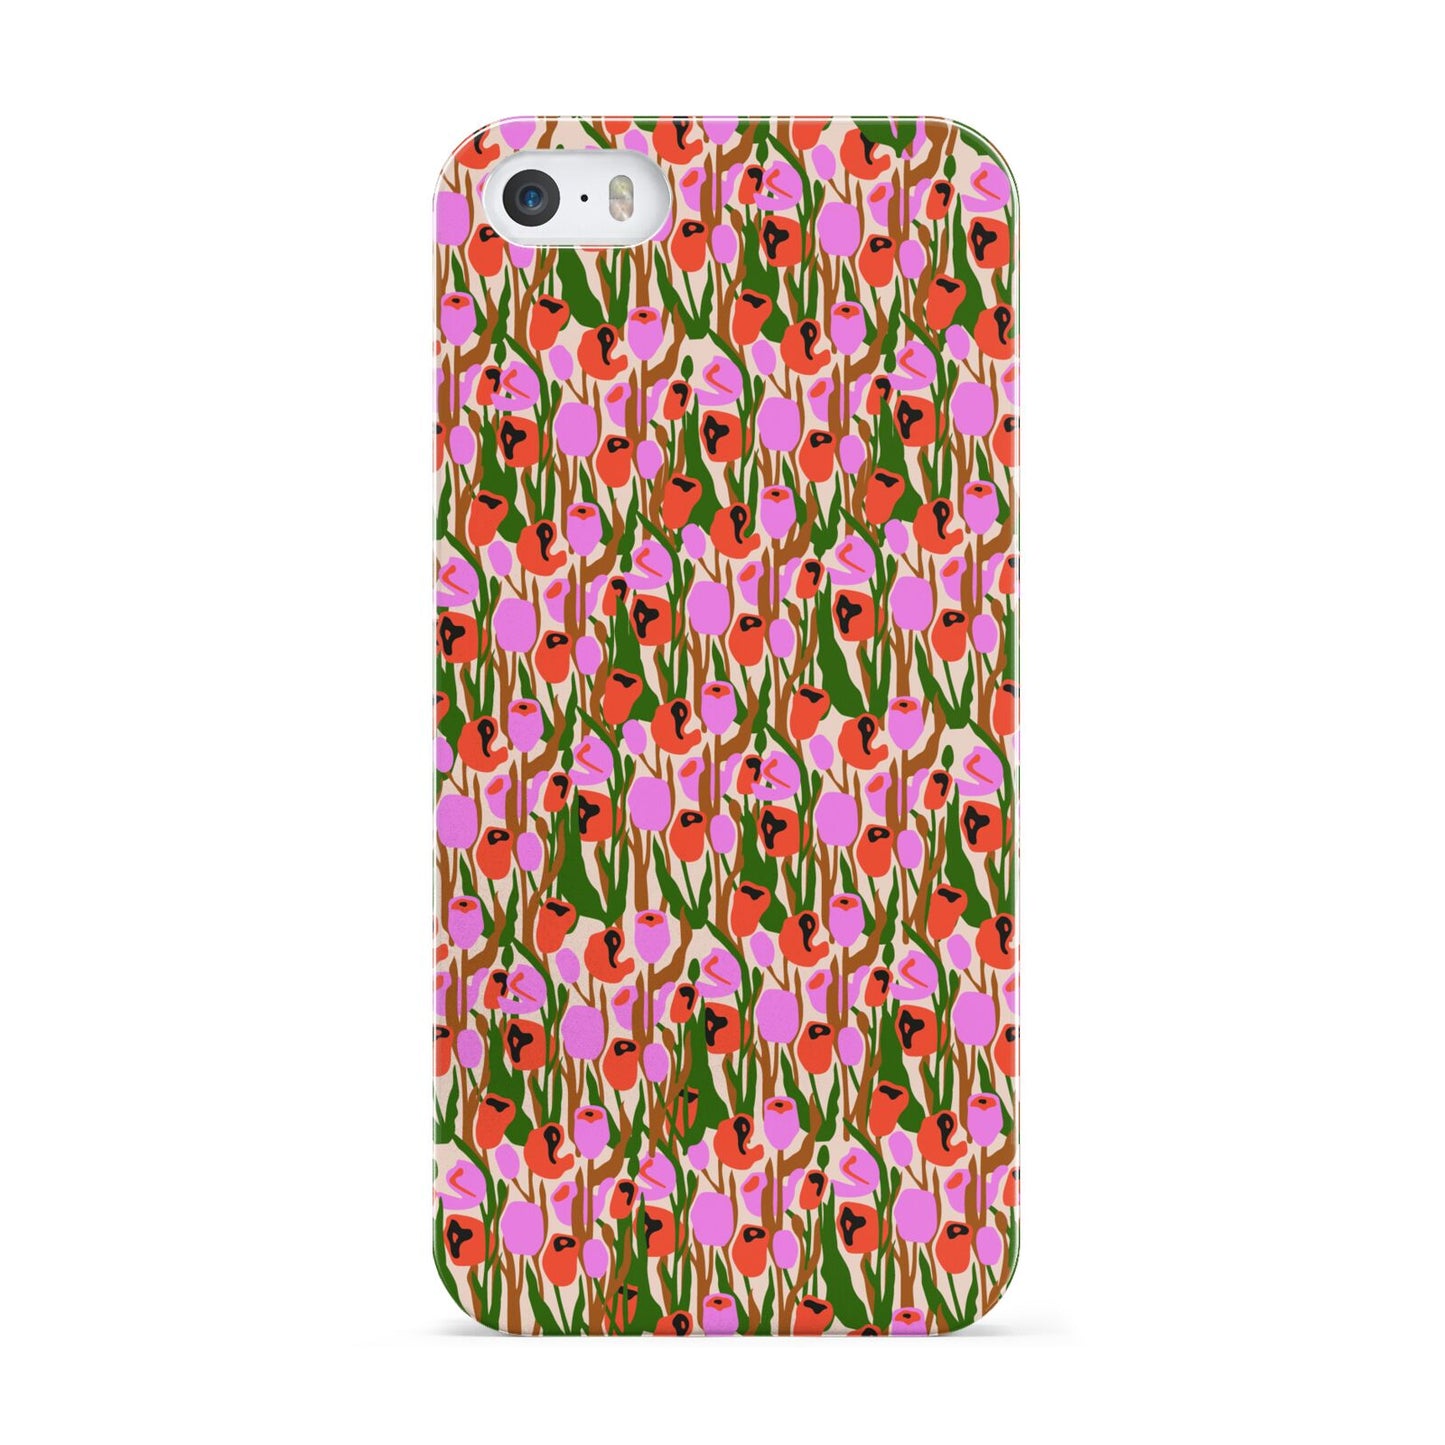 Floral Apple iPhone 5 Case